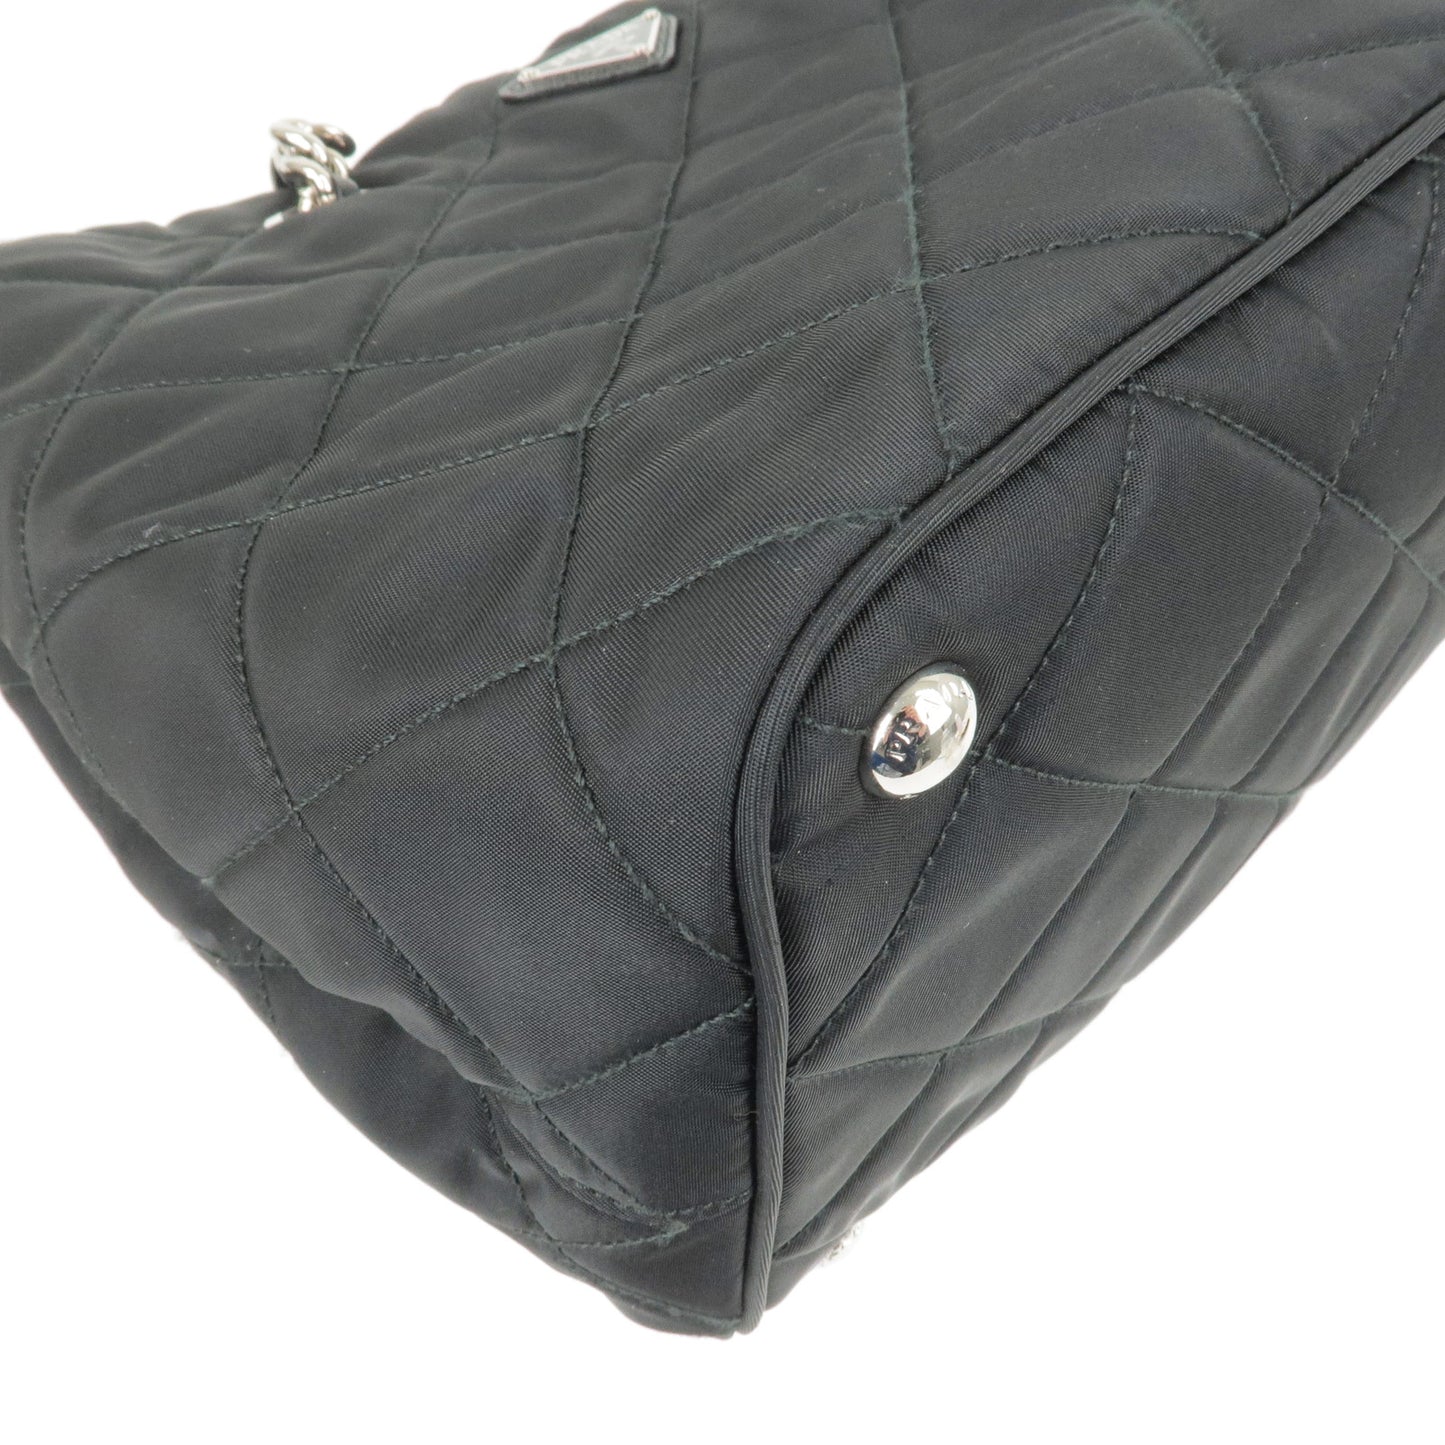 PRADA Nylon Leather Quilting 2Way Chain Shoulder Bag Black 1BG740